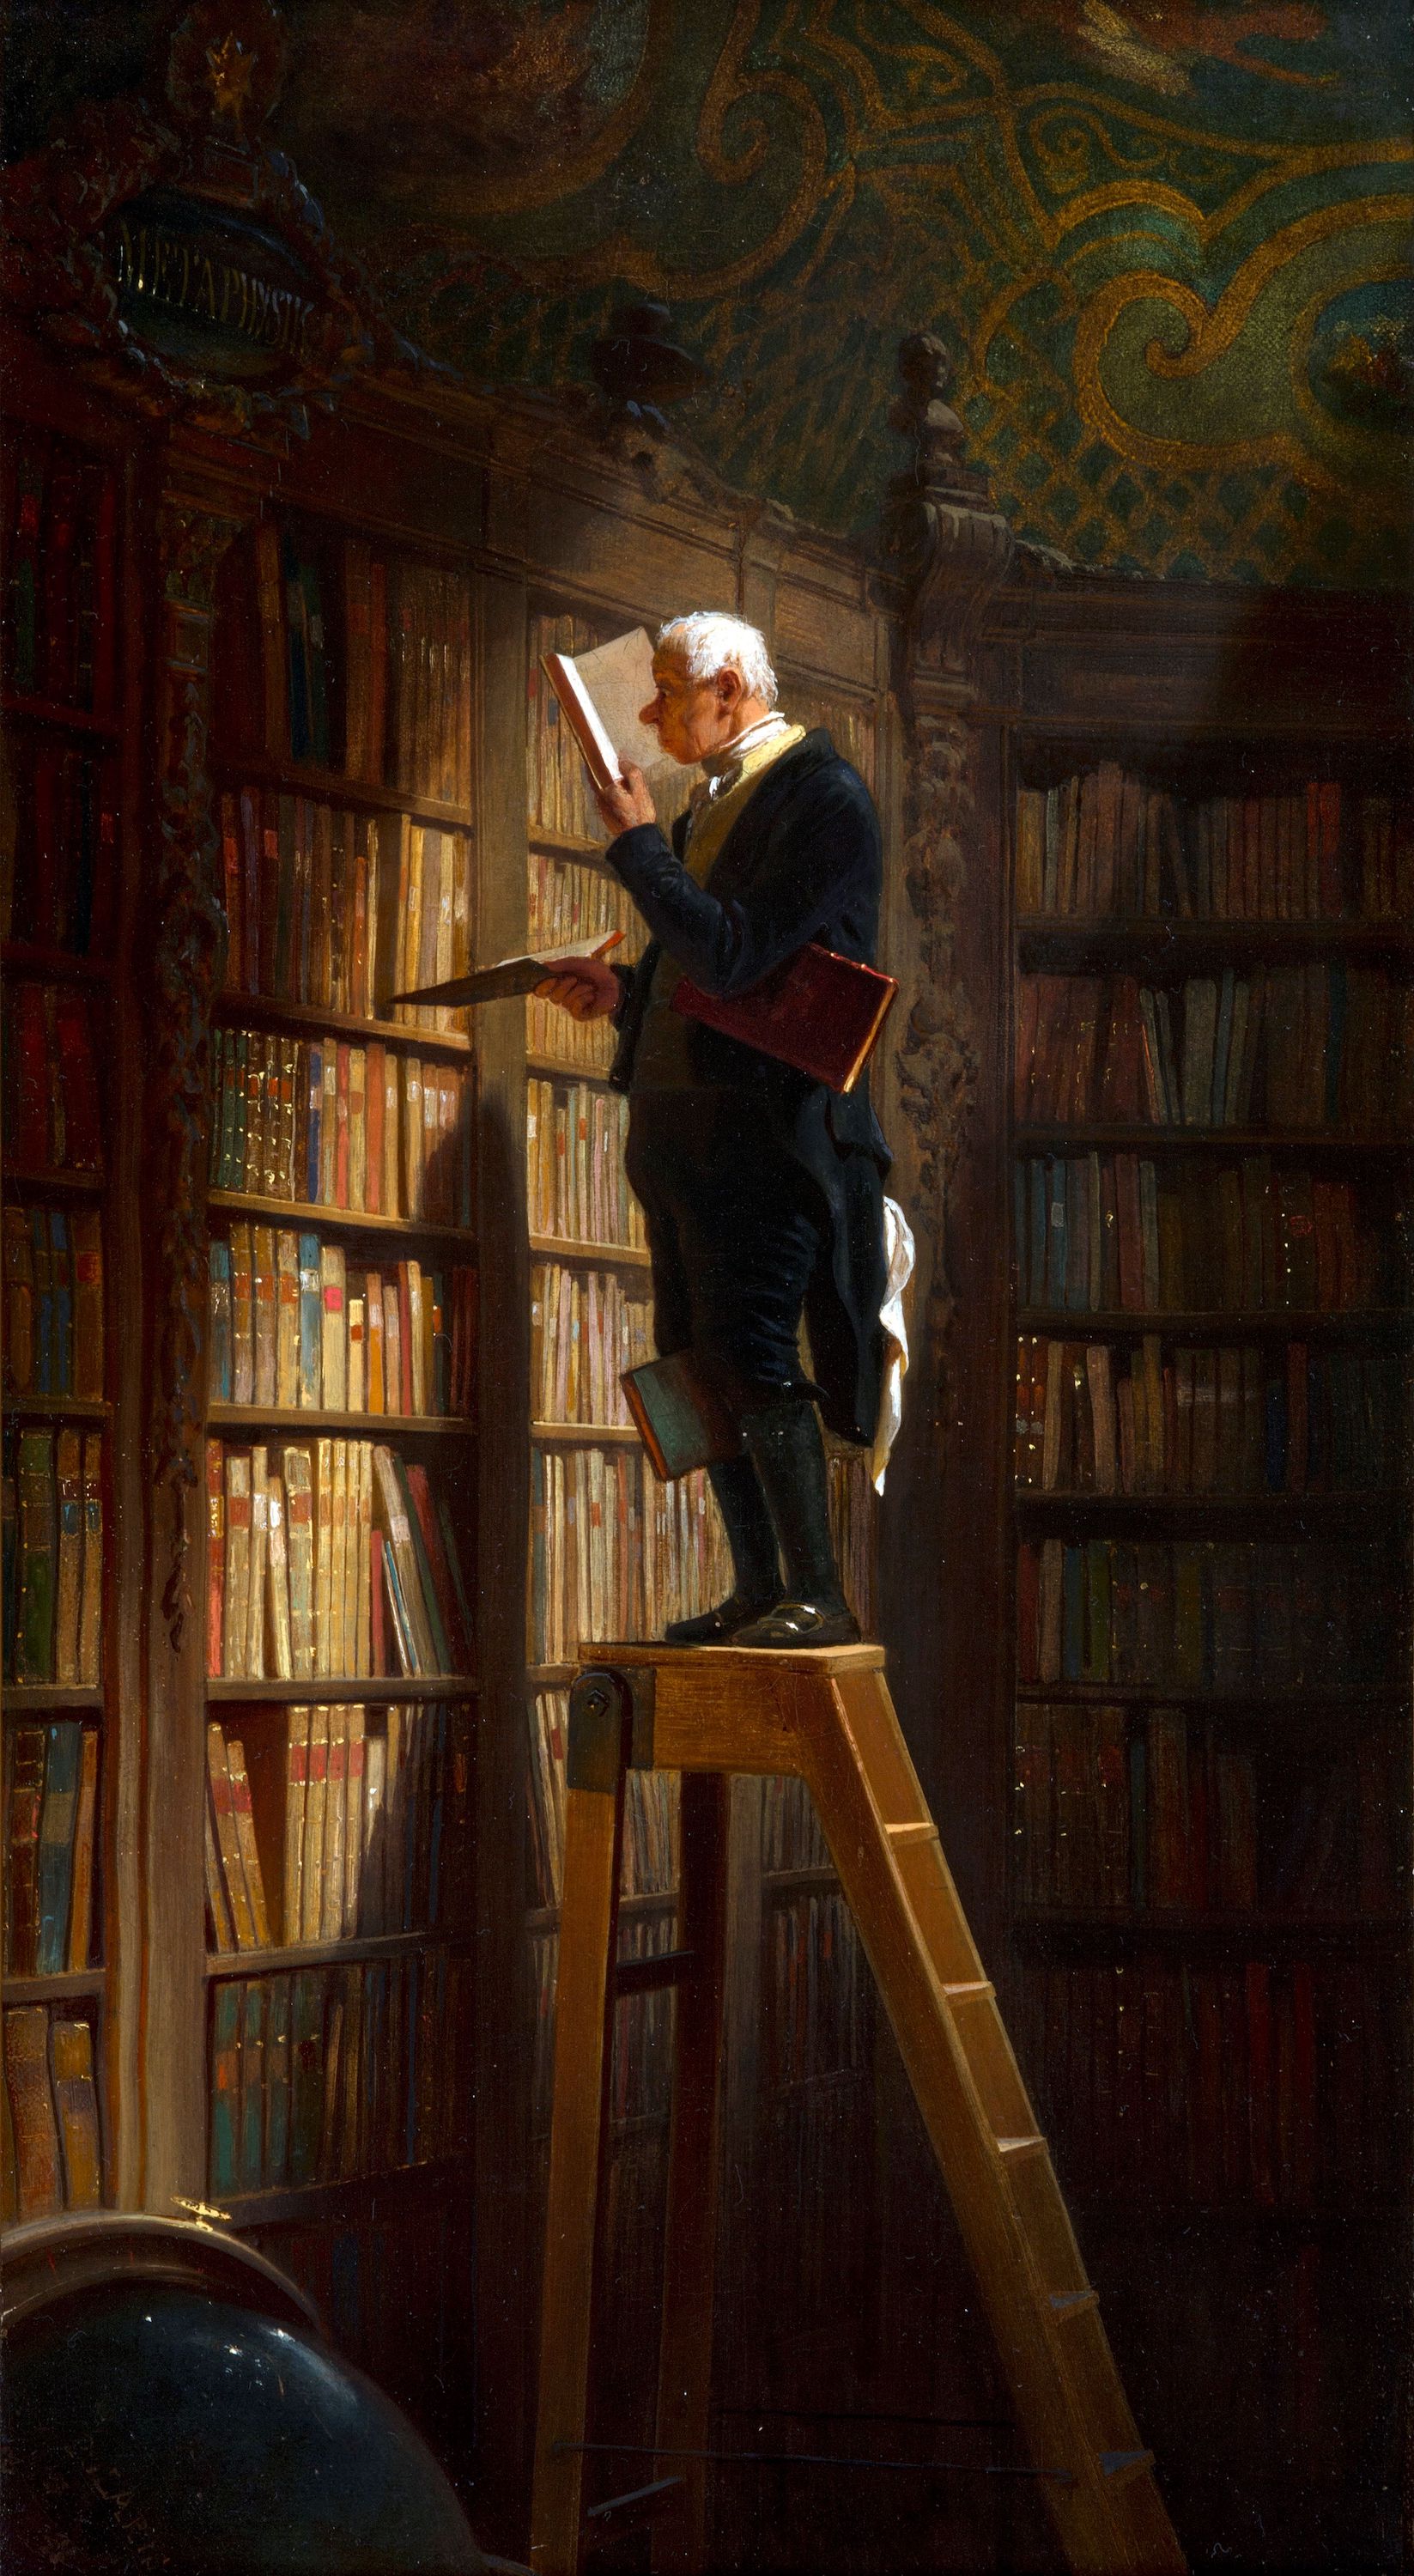 The Bookworm by Carl Spitzweg - c. 1850 - 49.5 x 26.8 cm Grohmann Museum